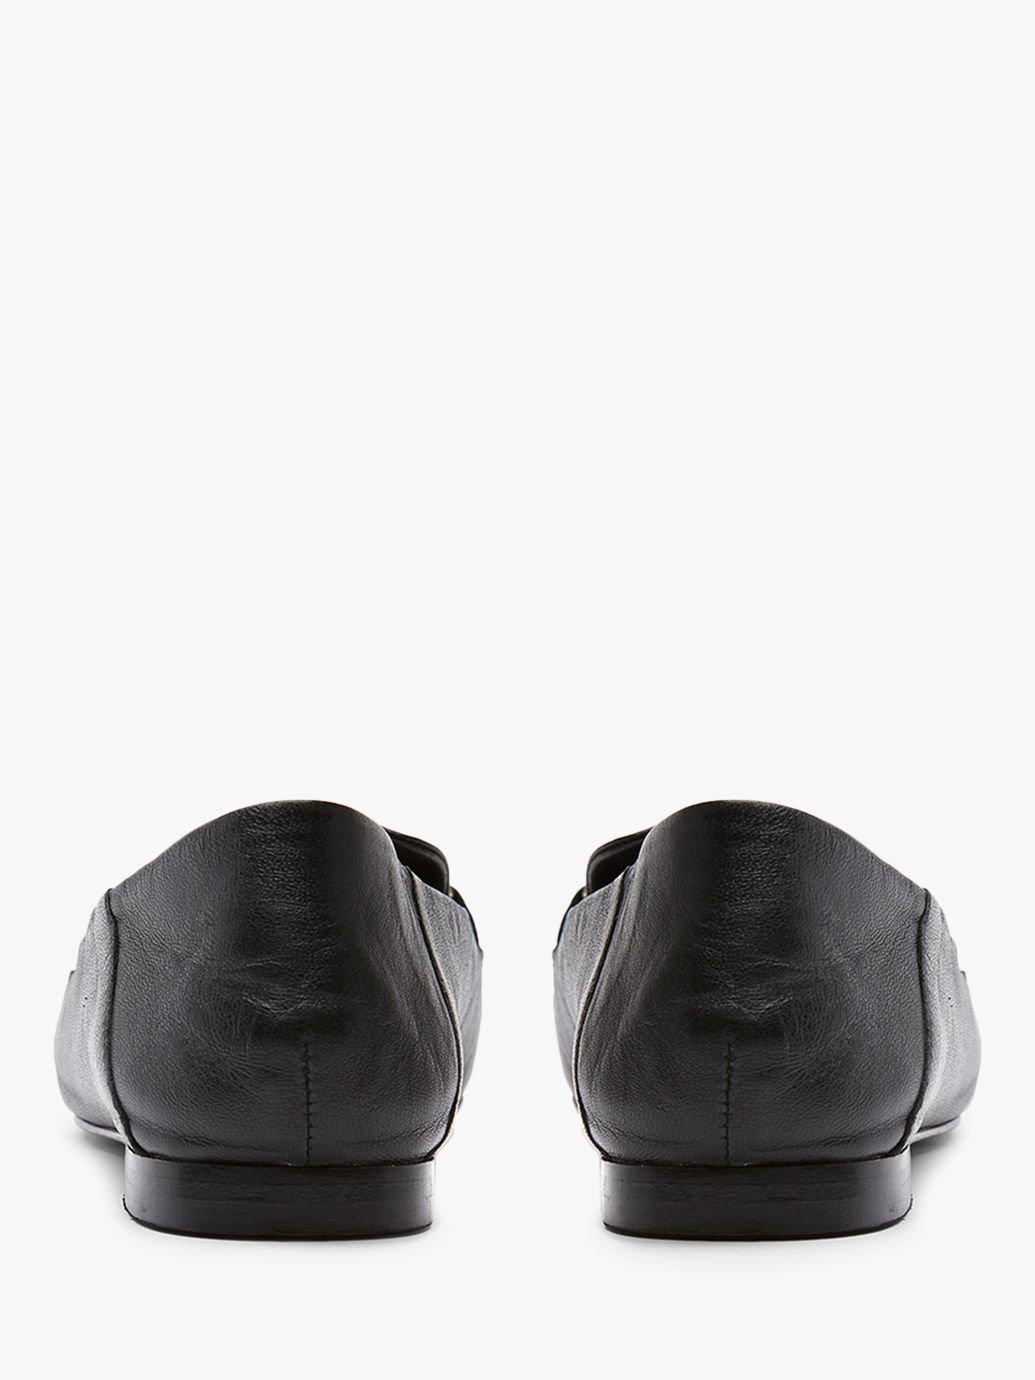 Mint Velvet Camille Leather Loafers, Black Black at John Lewis & Partners